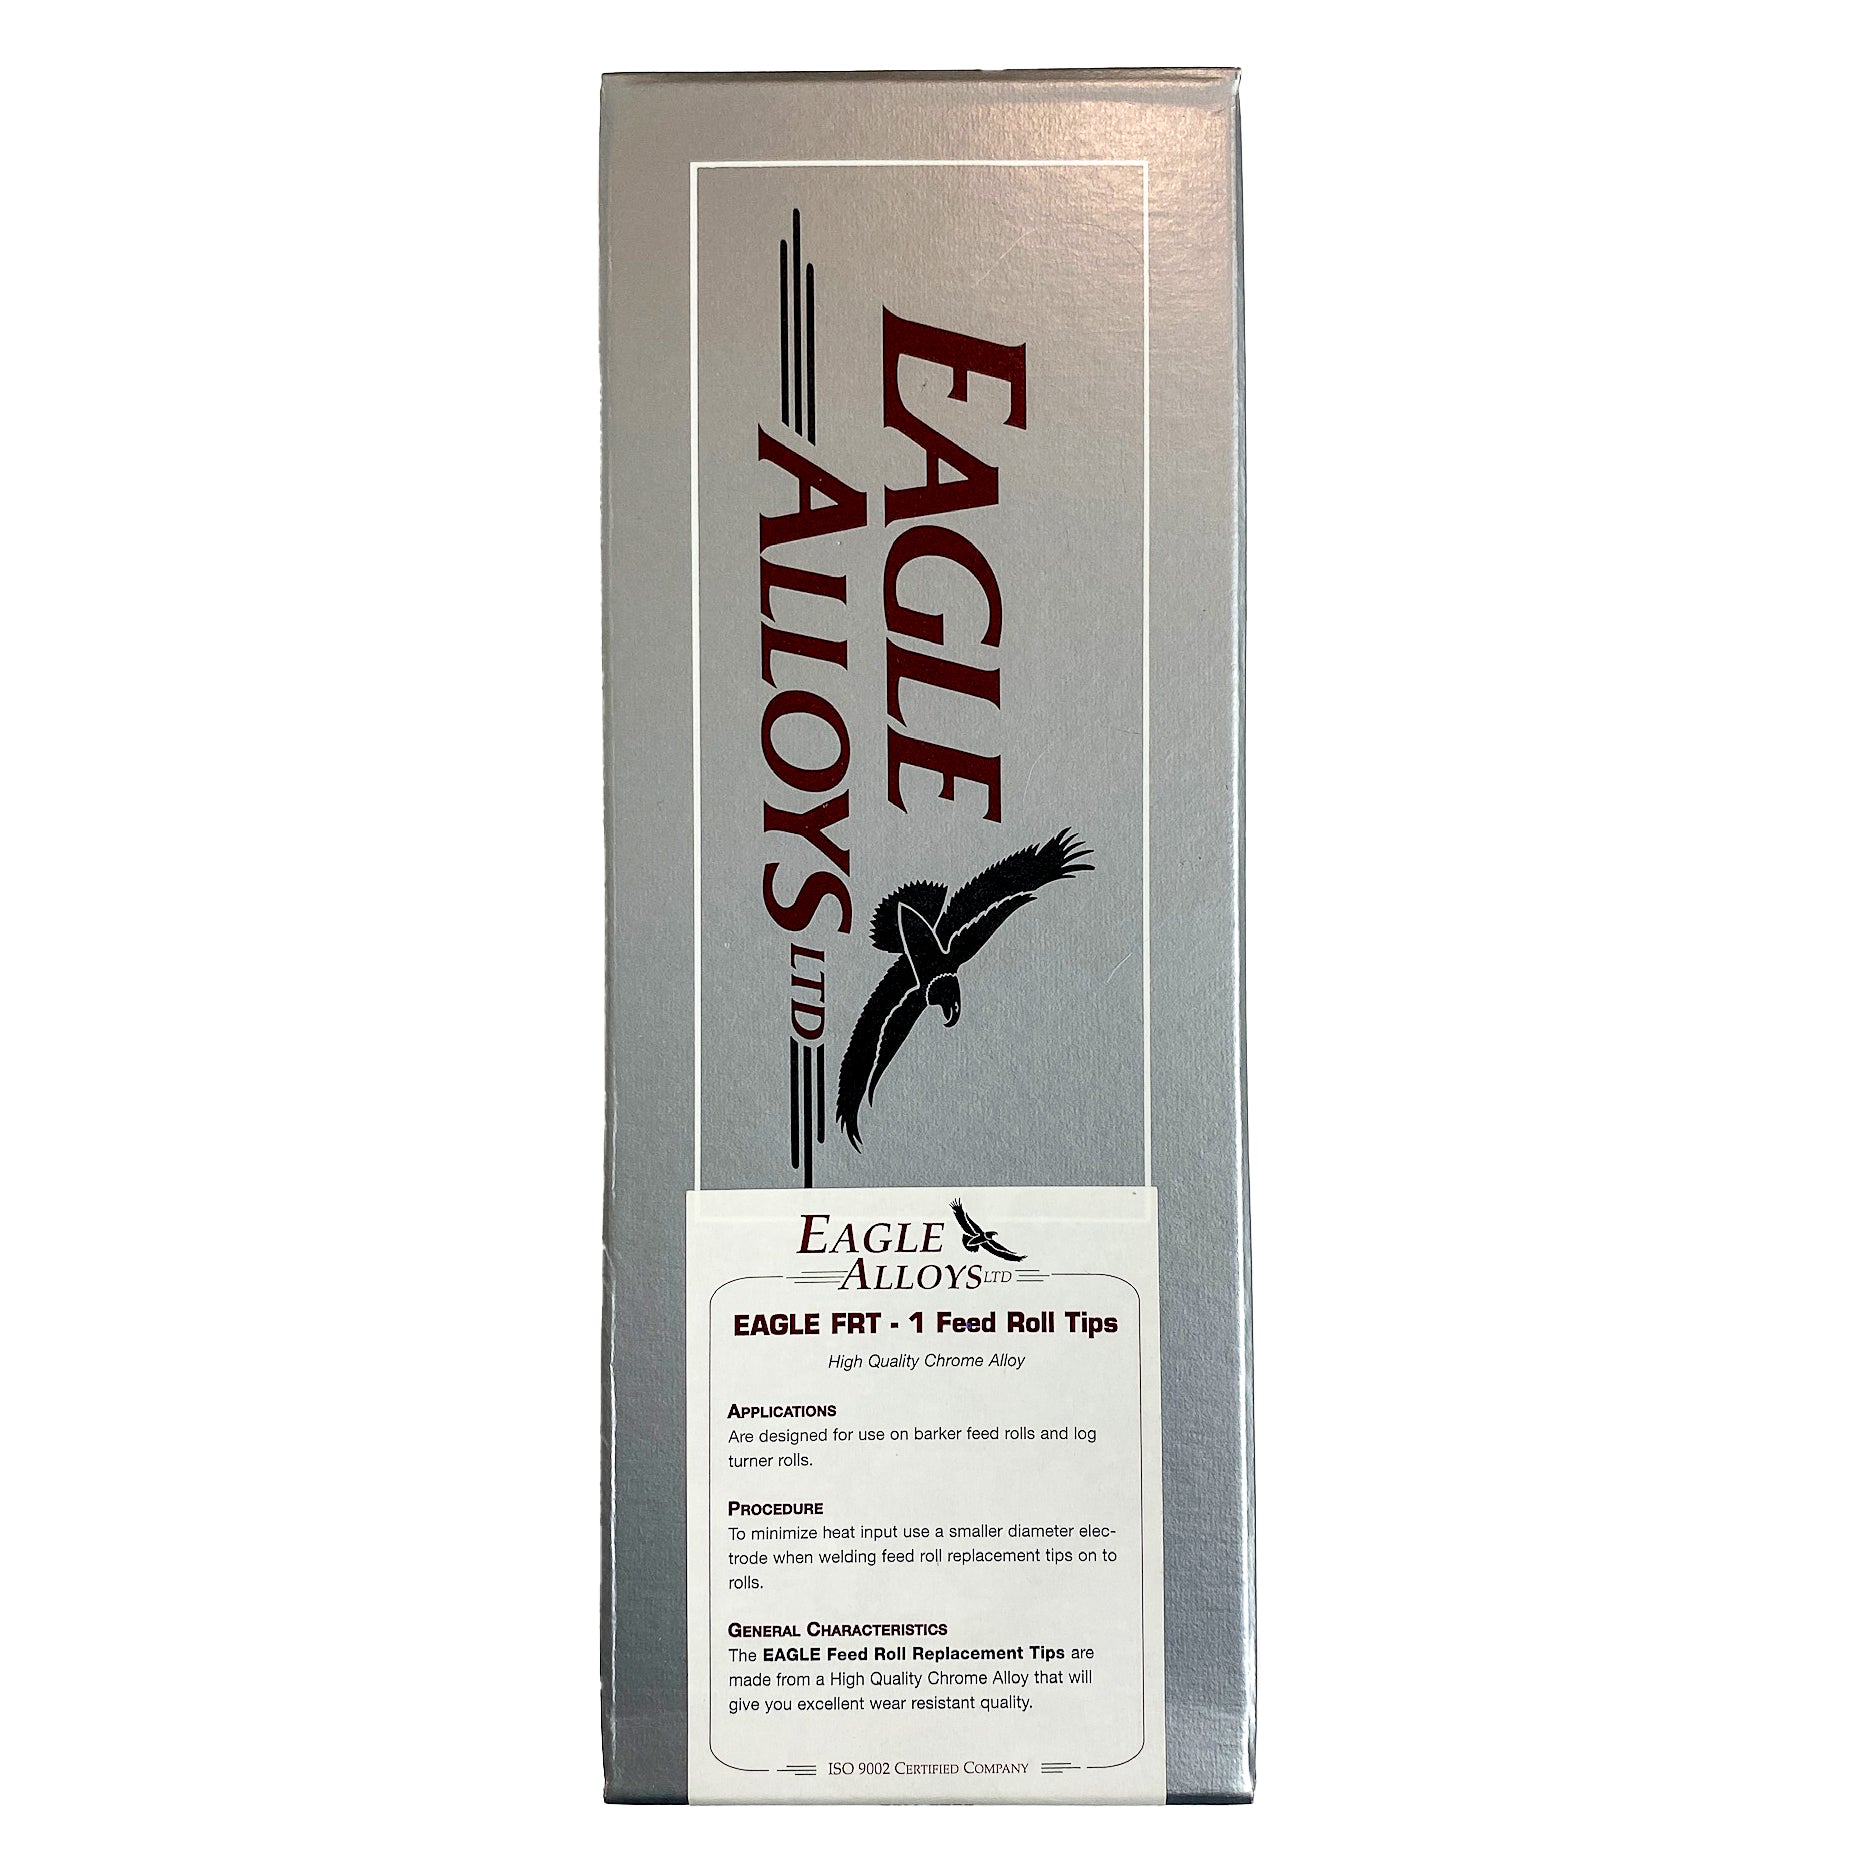 EAGLE FRT 1 FEED ROLL TIPS | High Quality Chrome Alloy